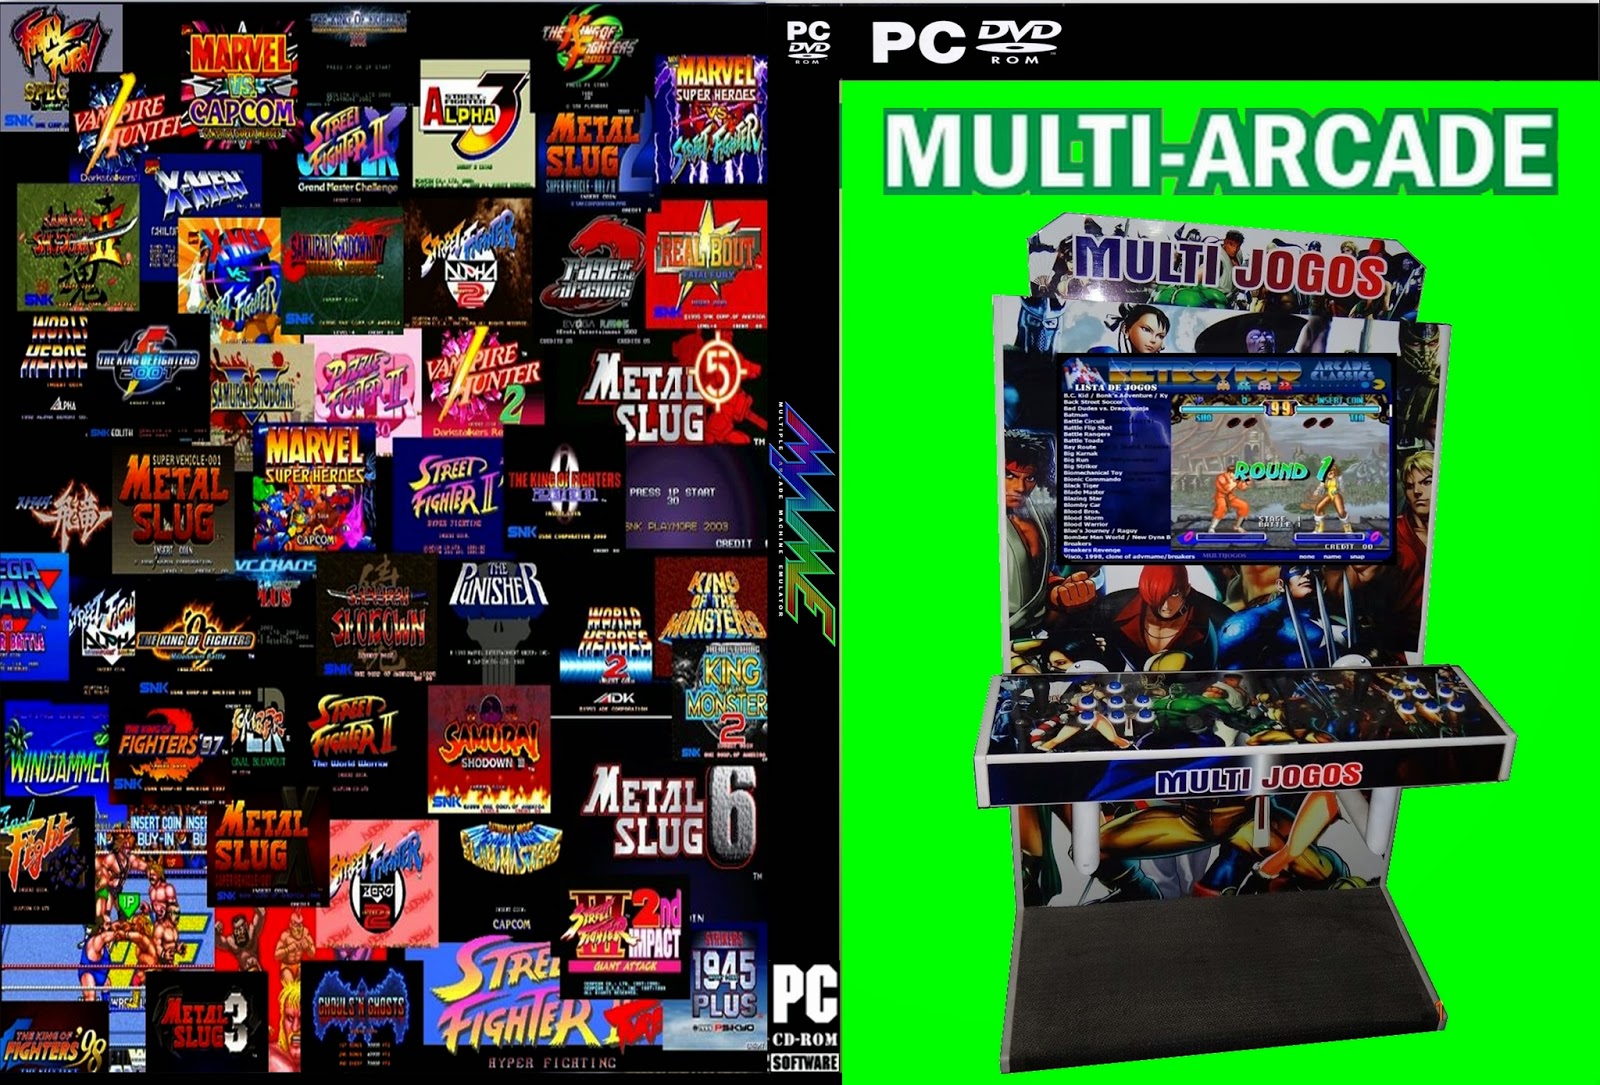 AdvanceMenu - Arcade MultiJogos Download Capa